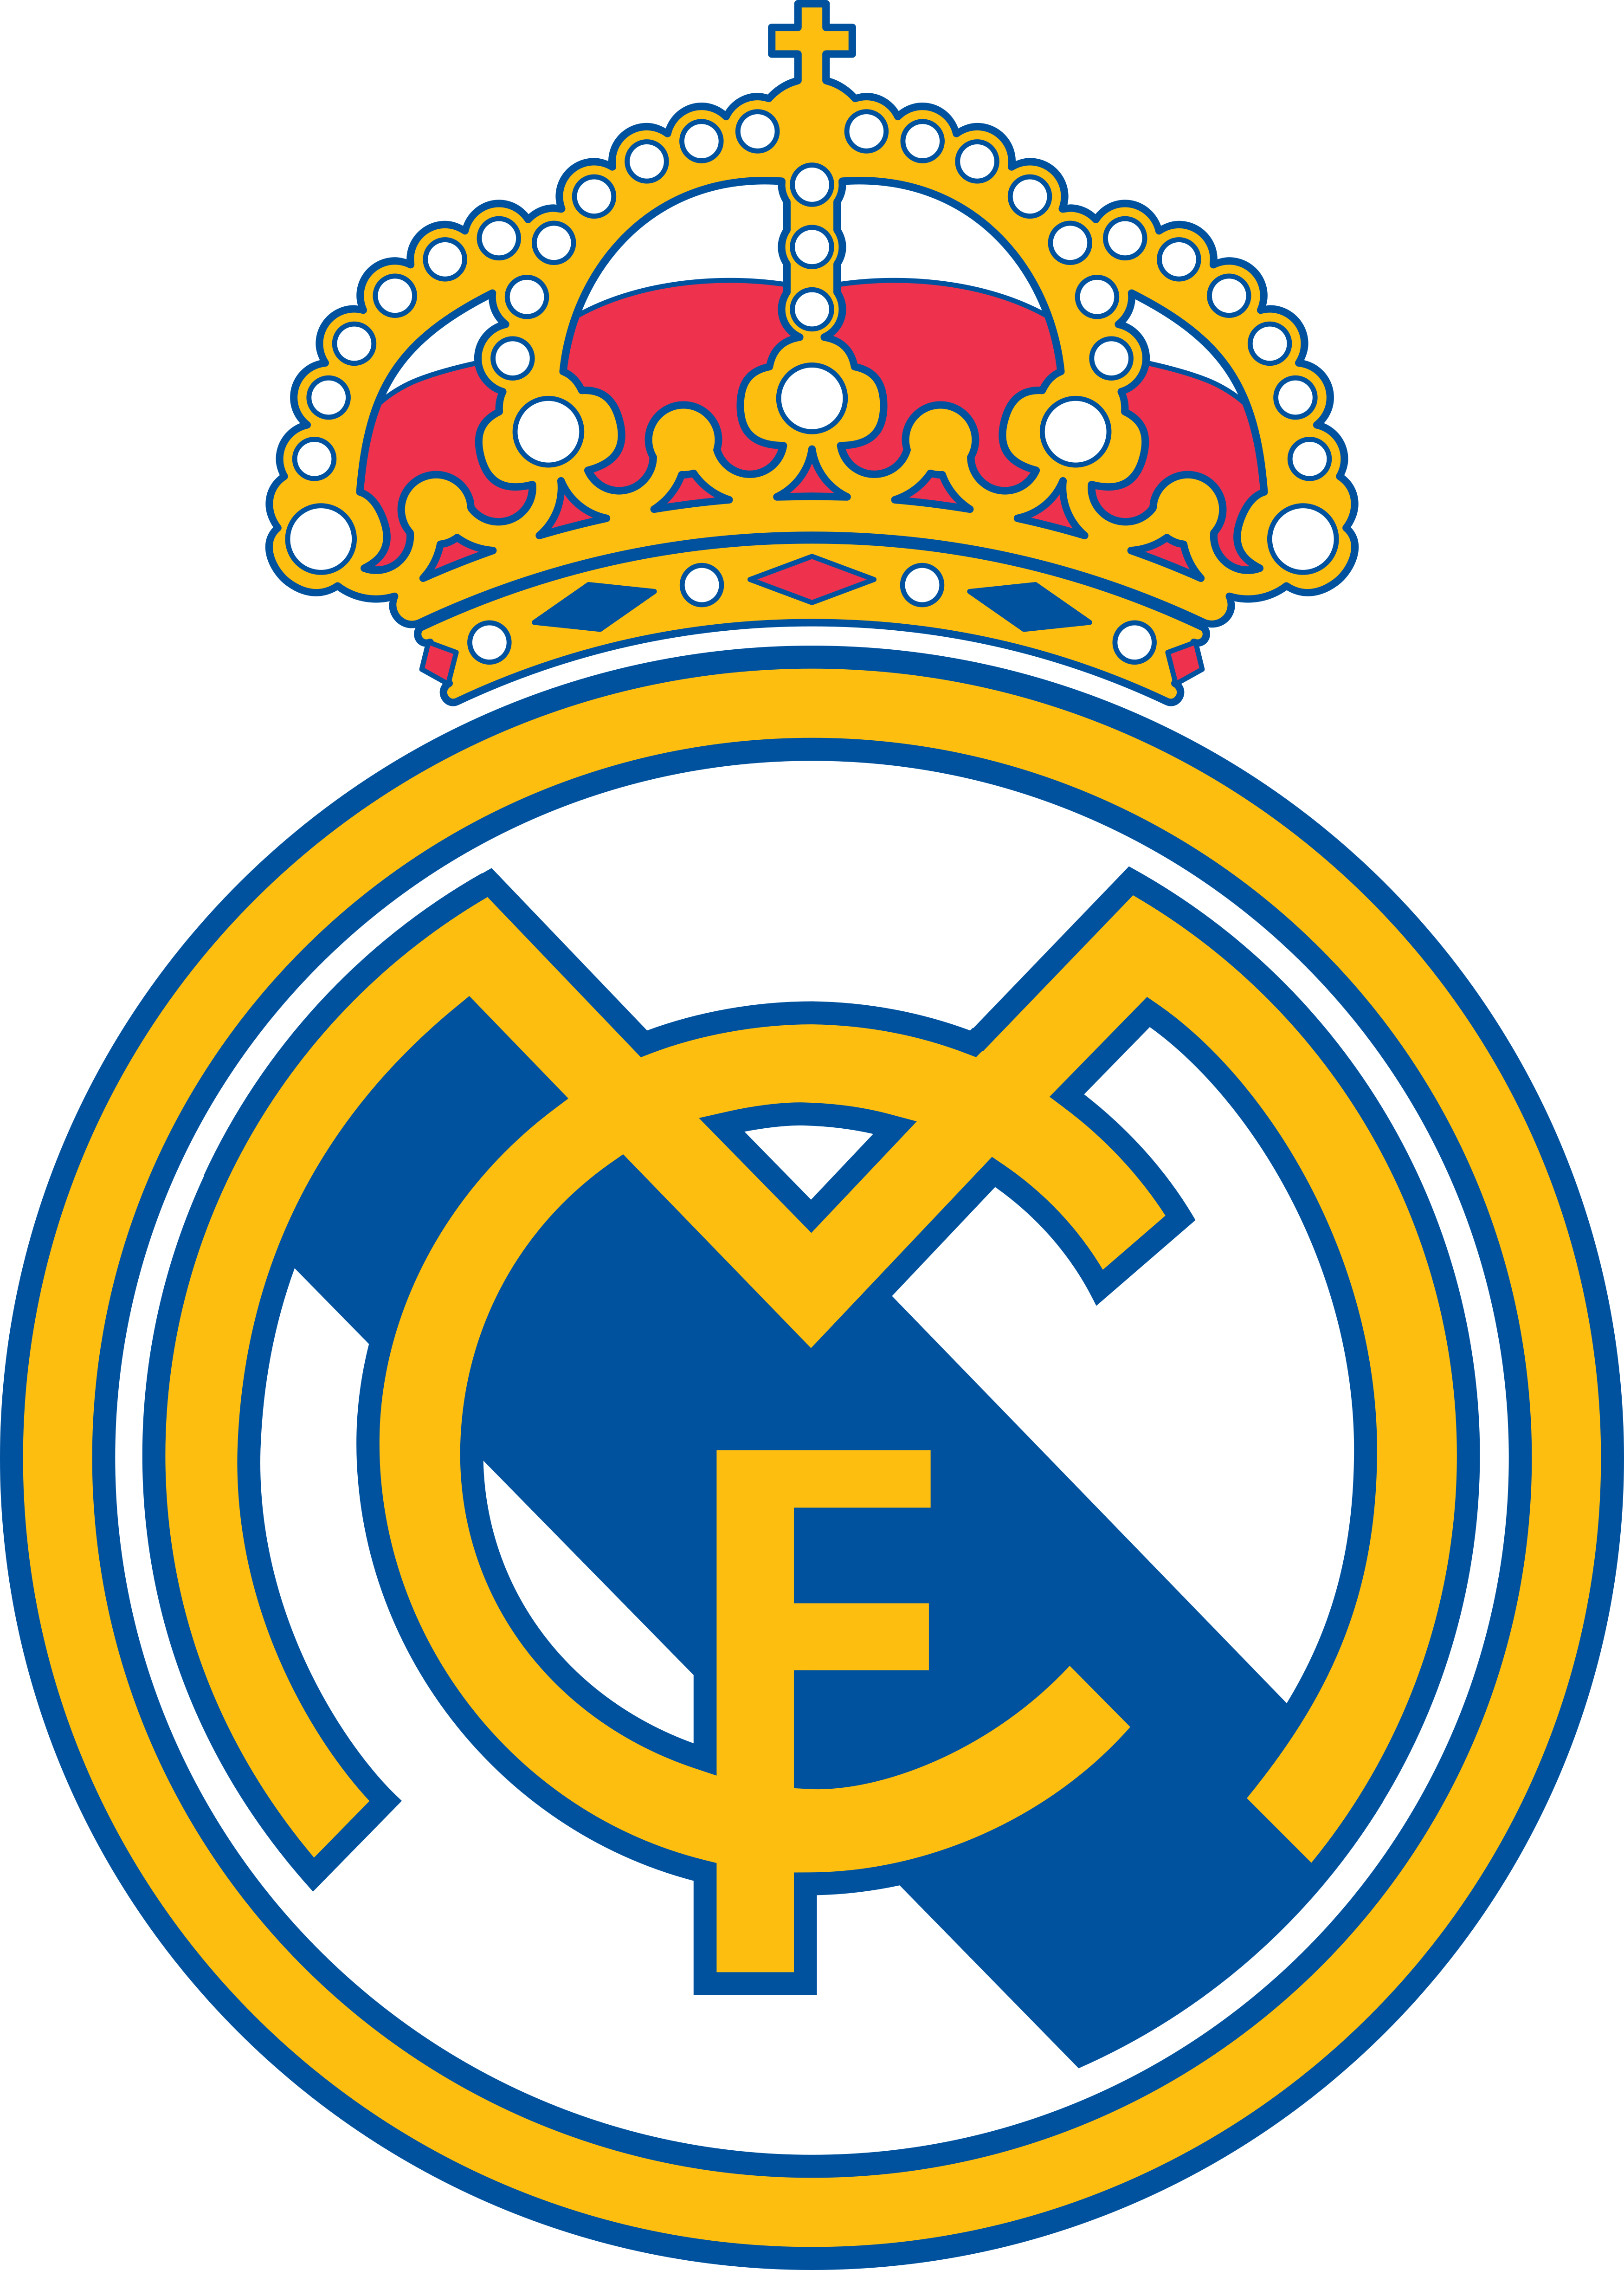 real madrid logo escudo - Real Madrid Logo - Real Madrid Club de Fútbol Escudo